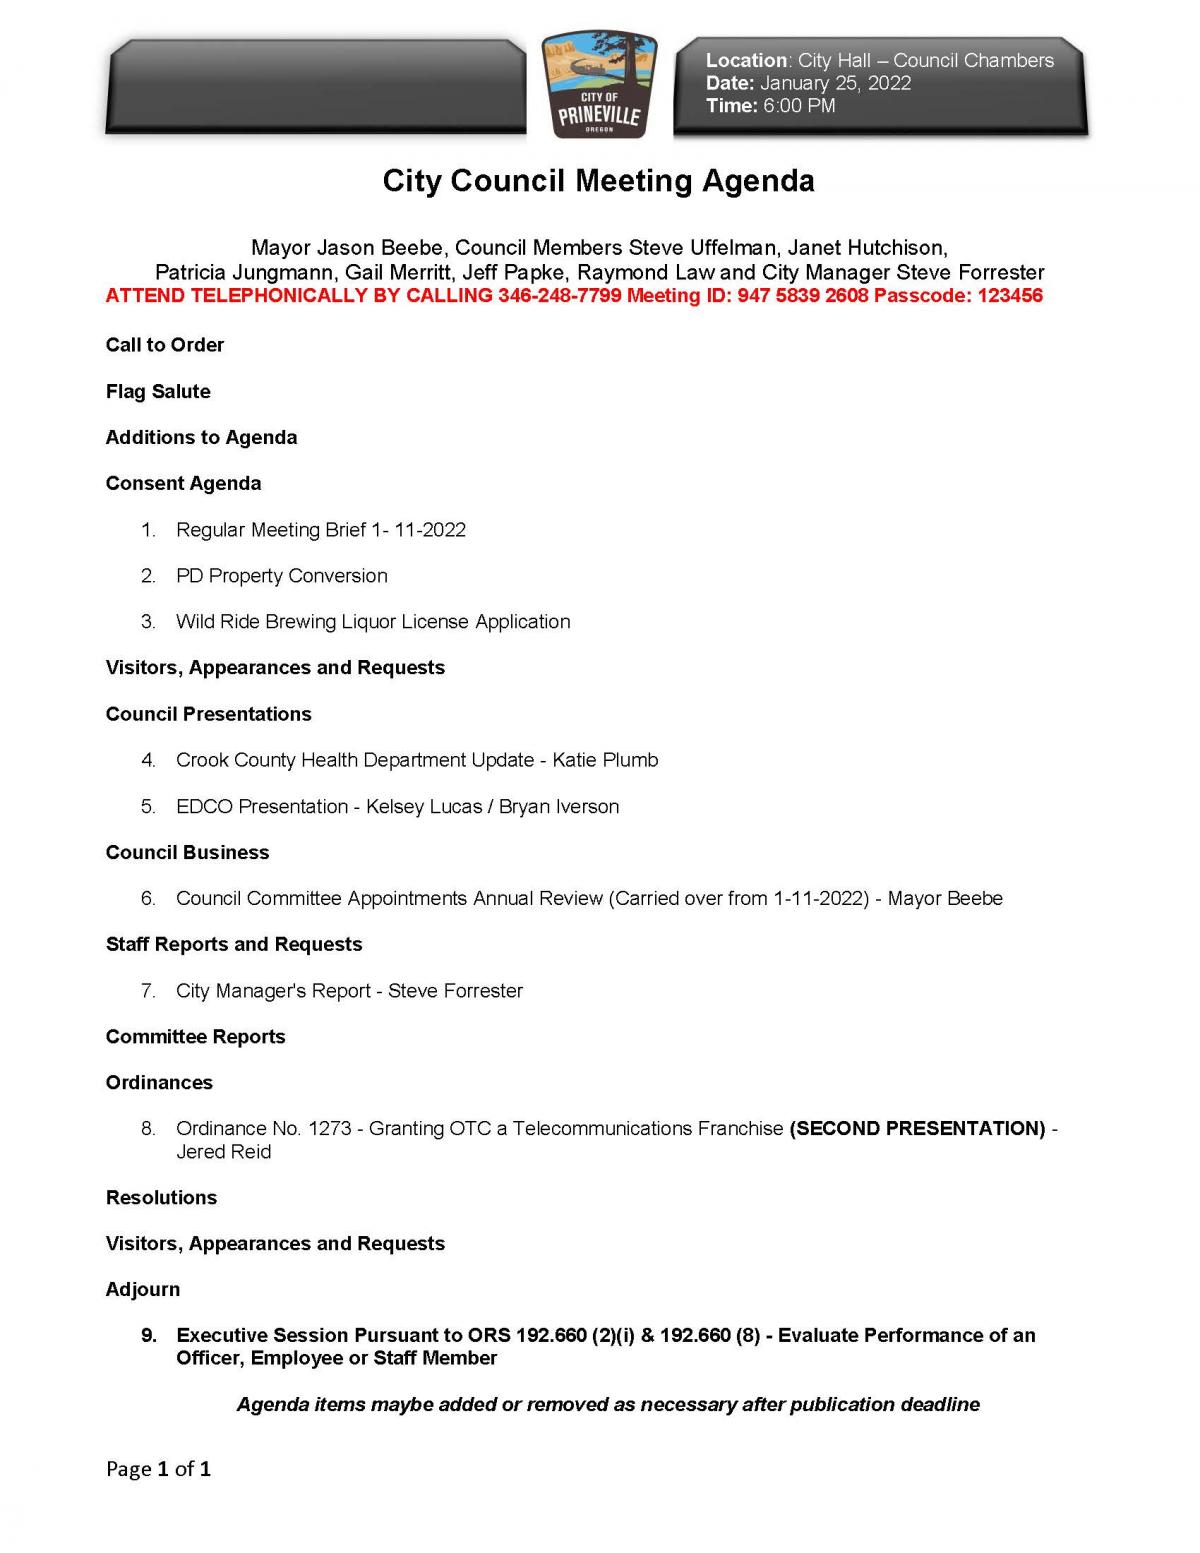 Council Agenda 1-25-2022